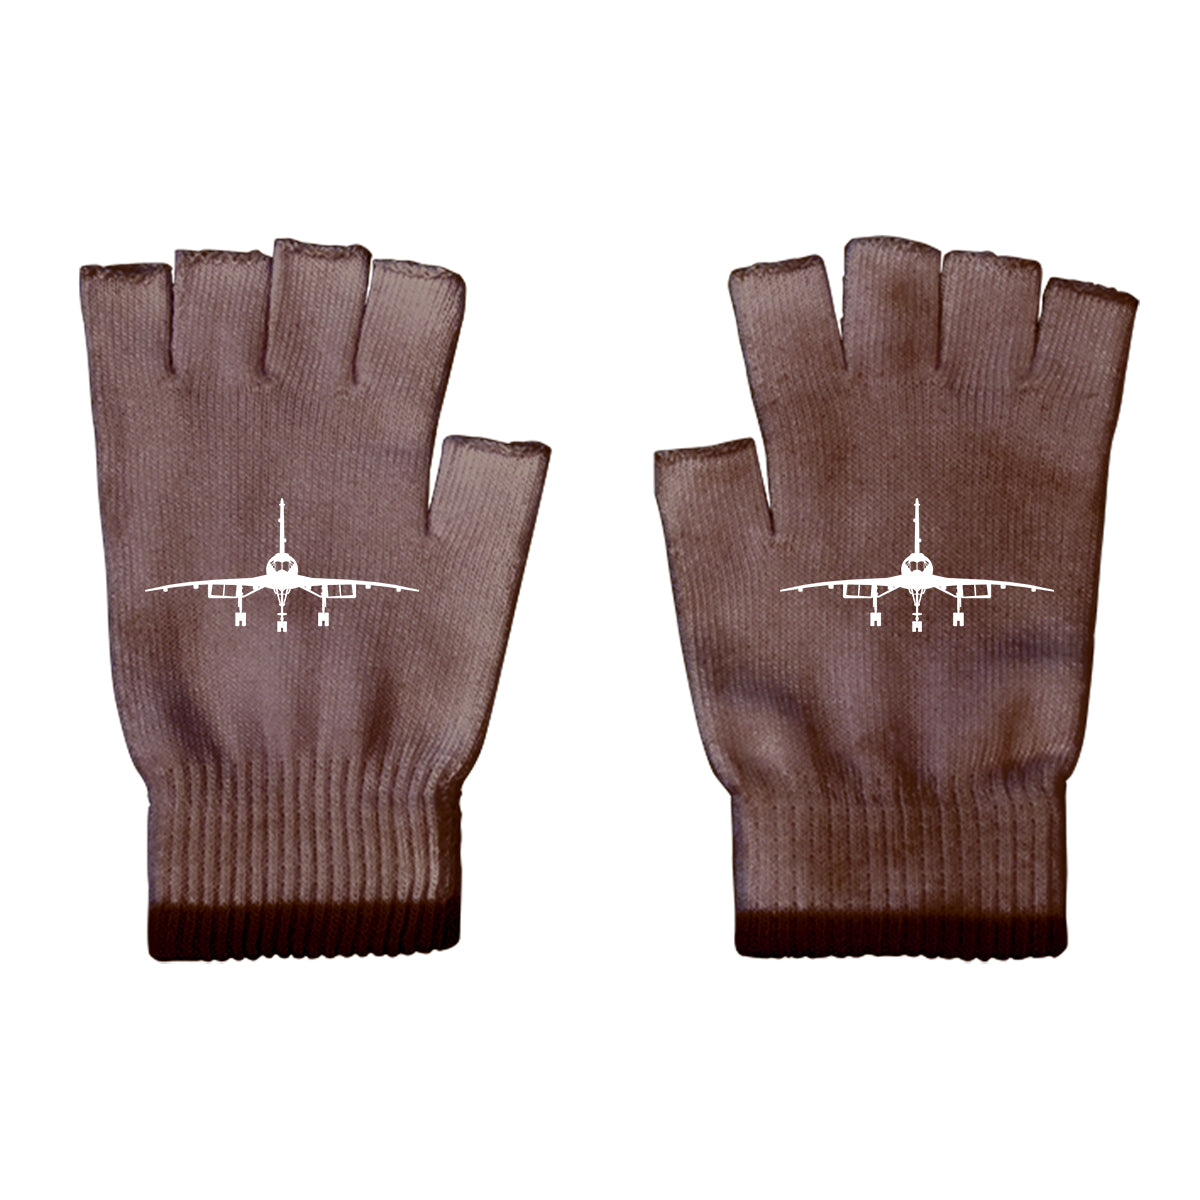 Concorde Silhouette Designed Cut Gloves